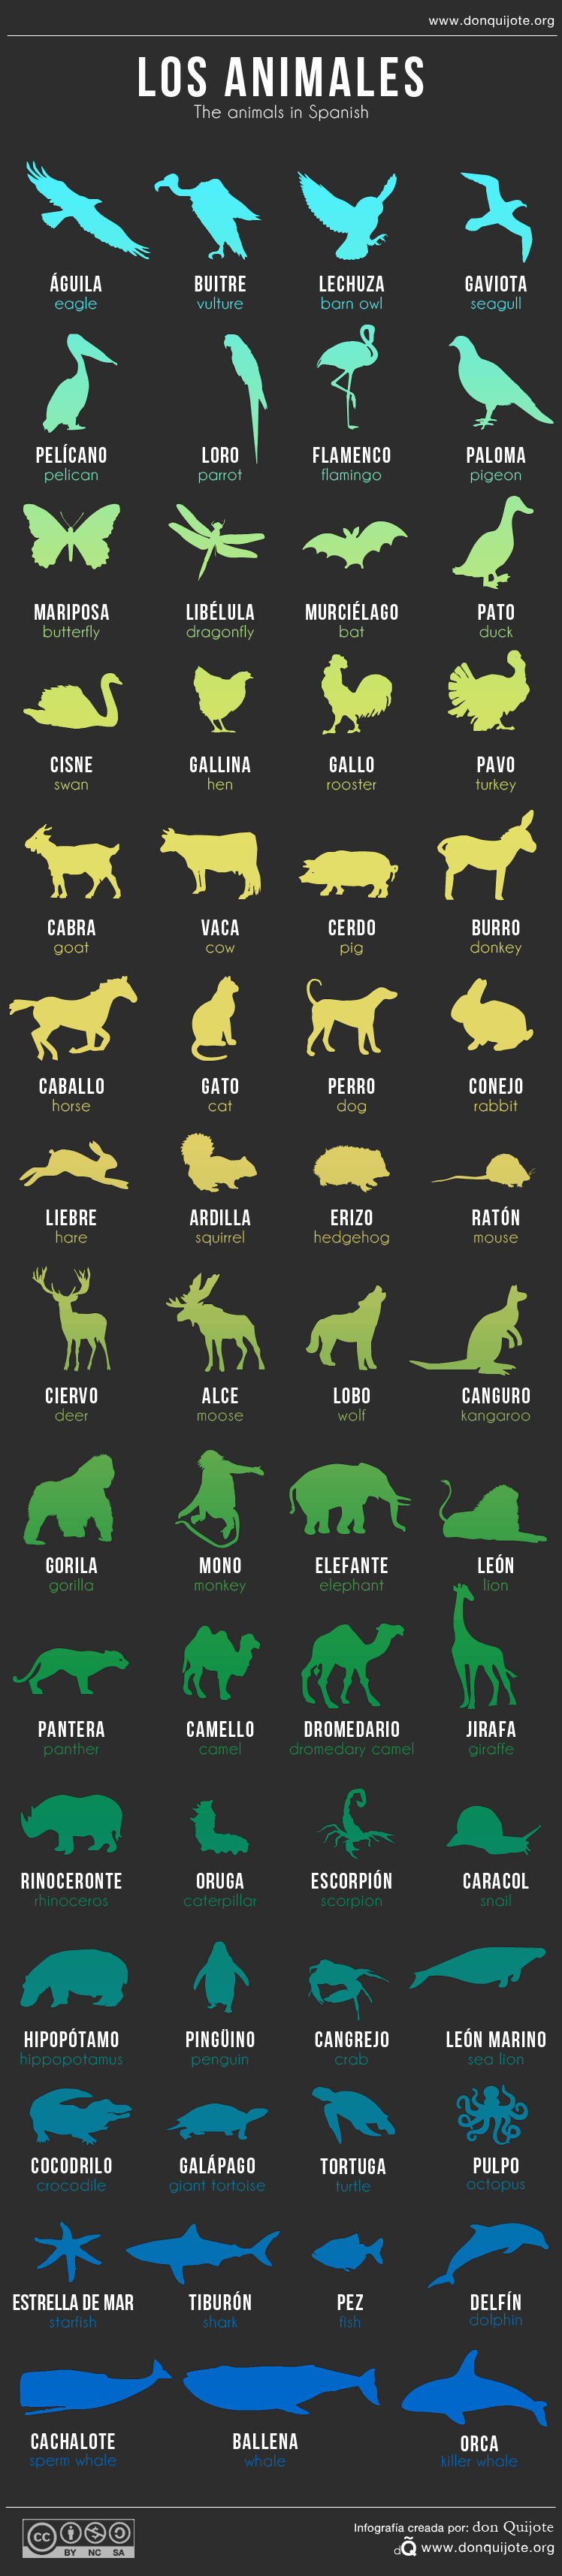 http://static.donquijote.org/images/infografias/infografia-vocabulario-animales_en.png